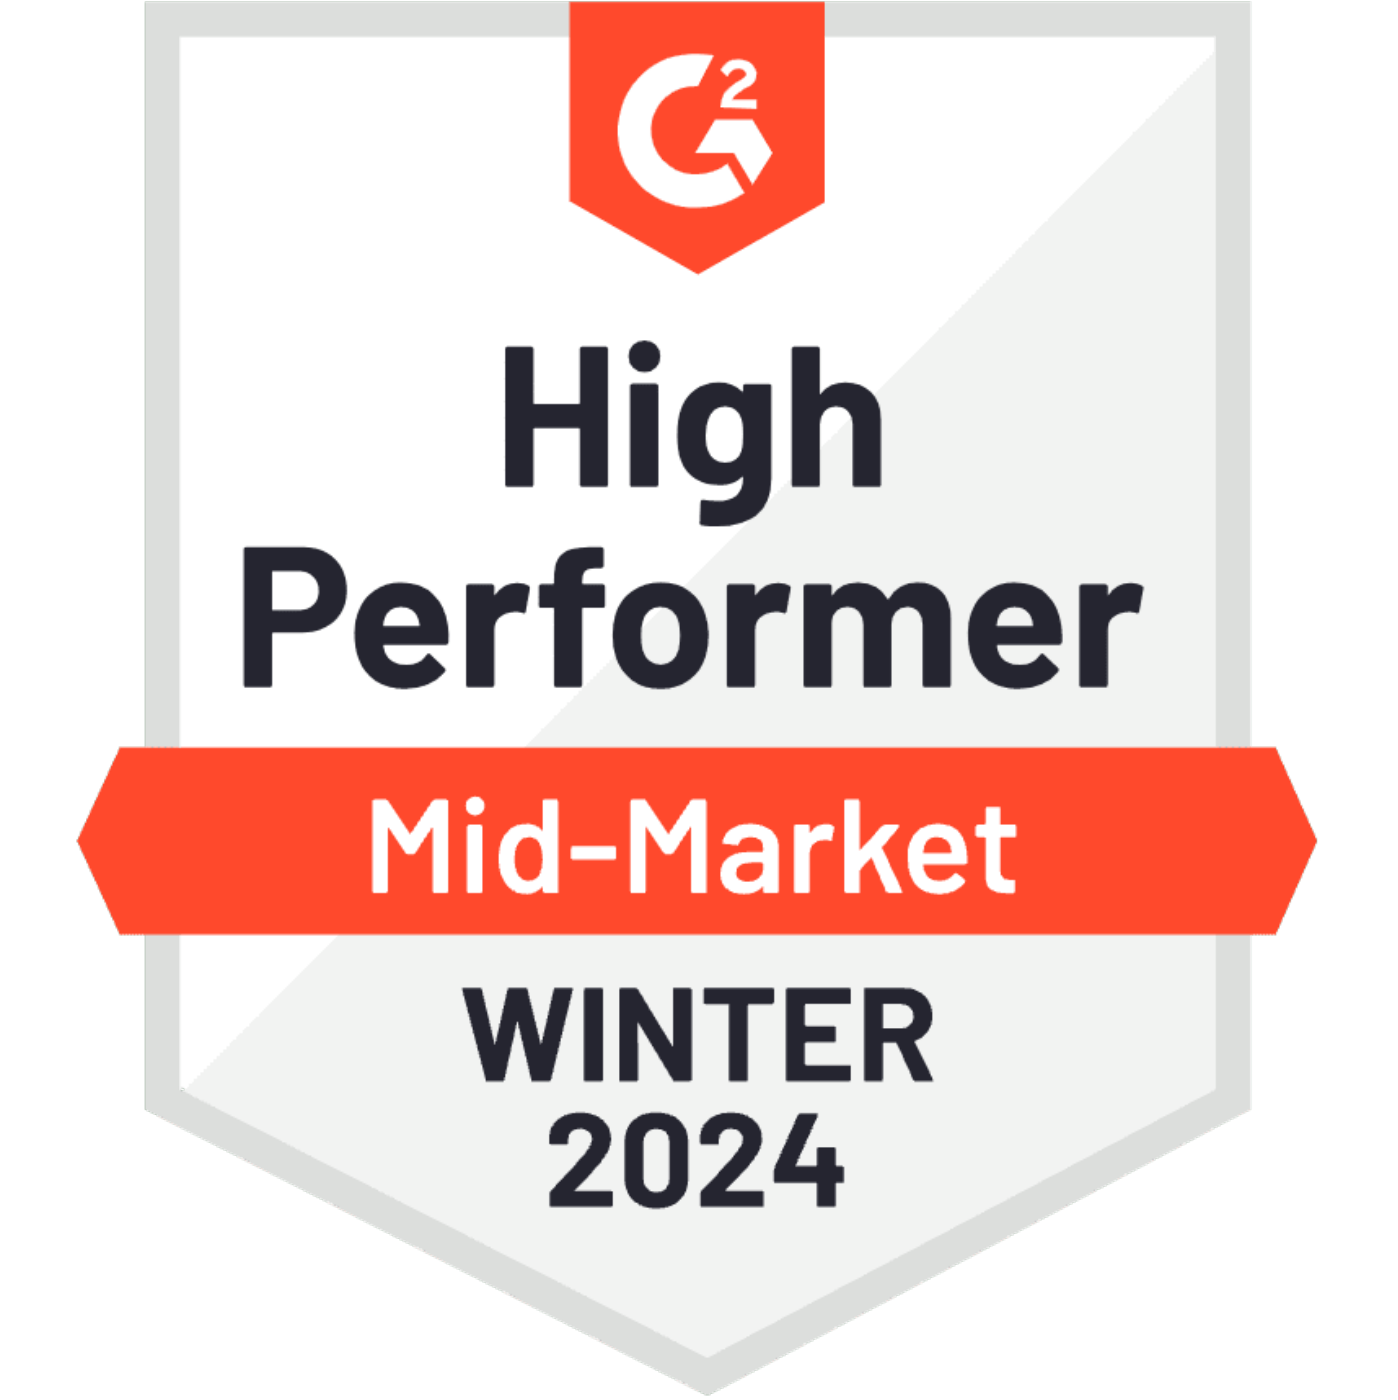 G2 Badge: High Performer Mid-Market Winter 2024